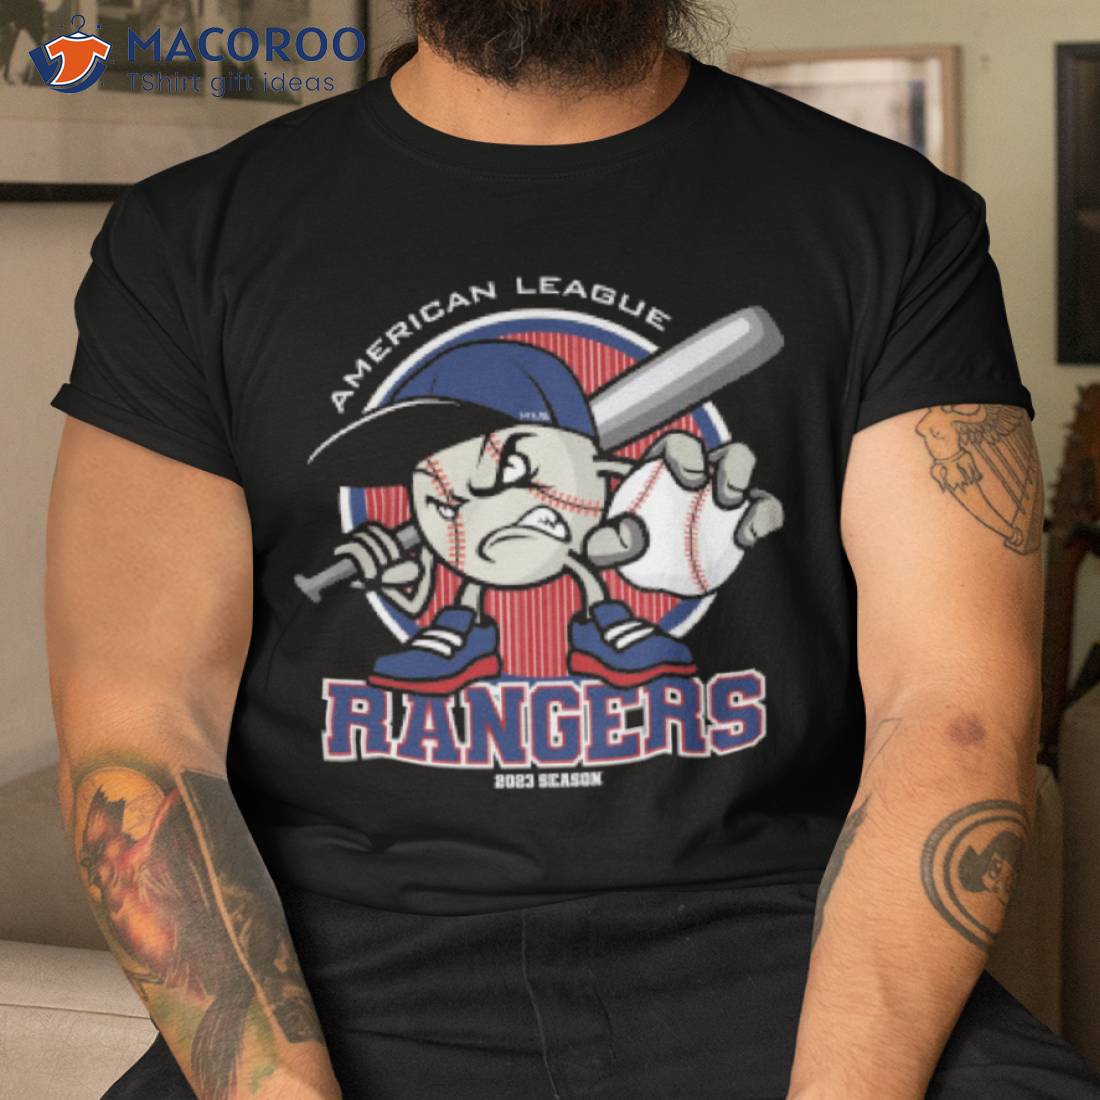 Rockies Baseball T-shirt Sports Shirt Gift Rangers Tee Game Day